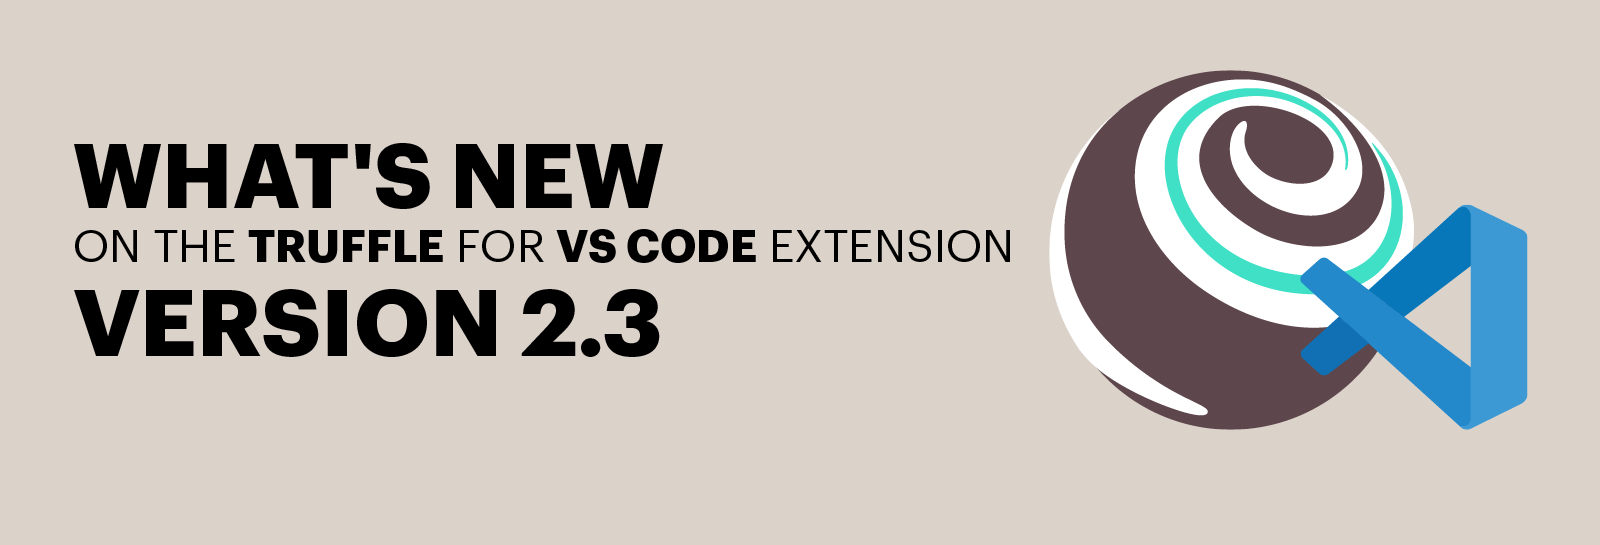 truffle vs code extension - banner